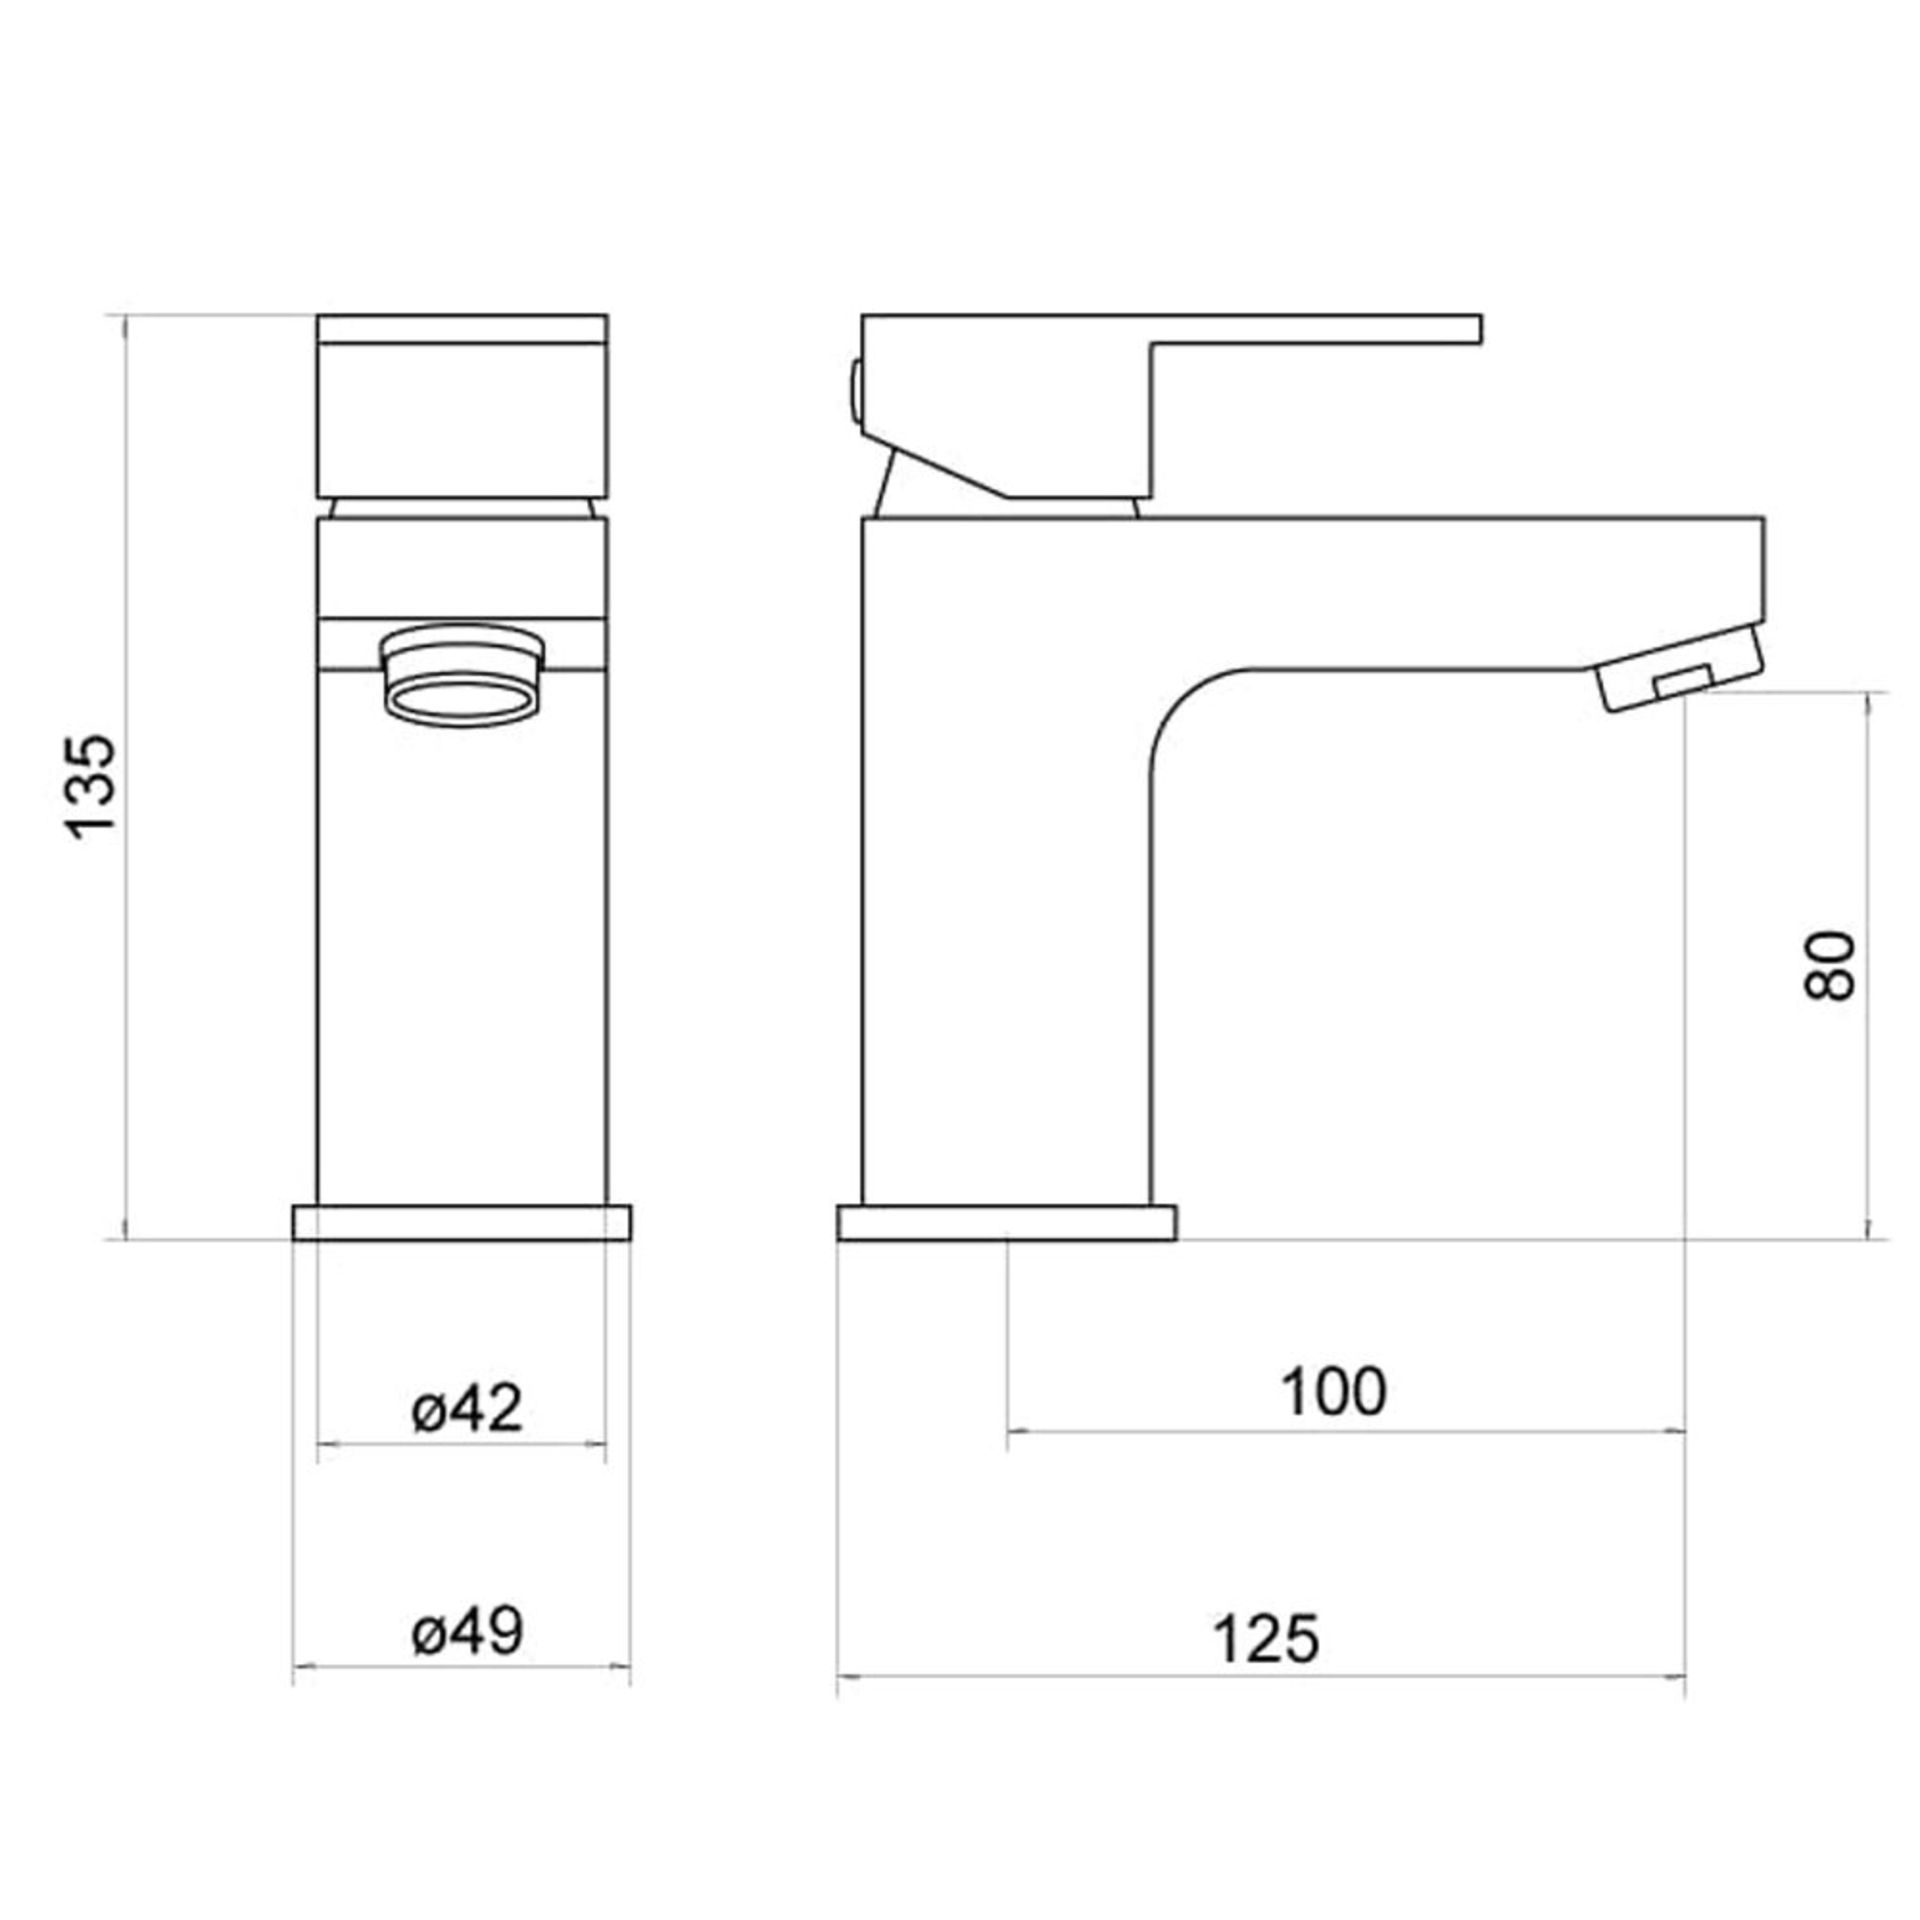 1 x Kawa Black Single Lever Deck Mounted Basin Mixer - New and Boxed - RRP £85 - Image 3 of 3